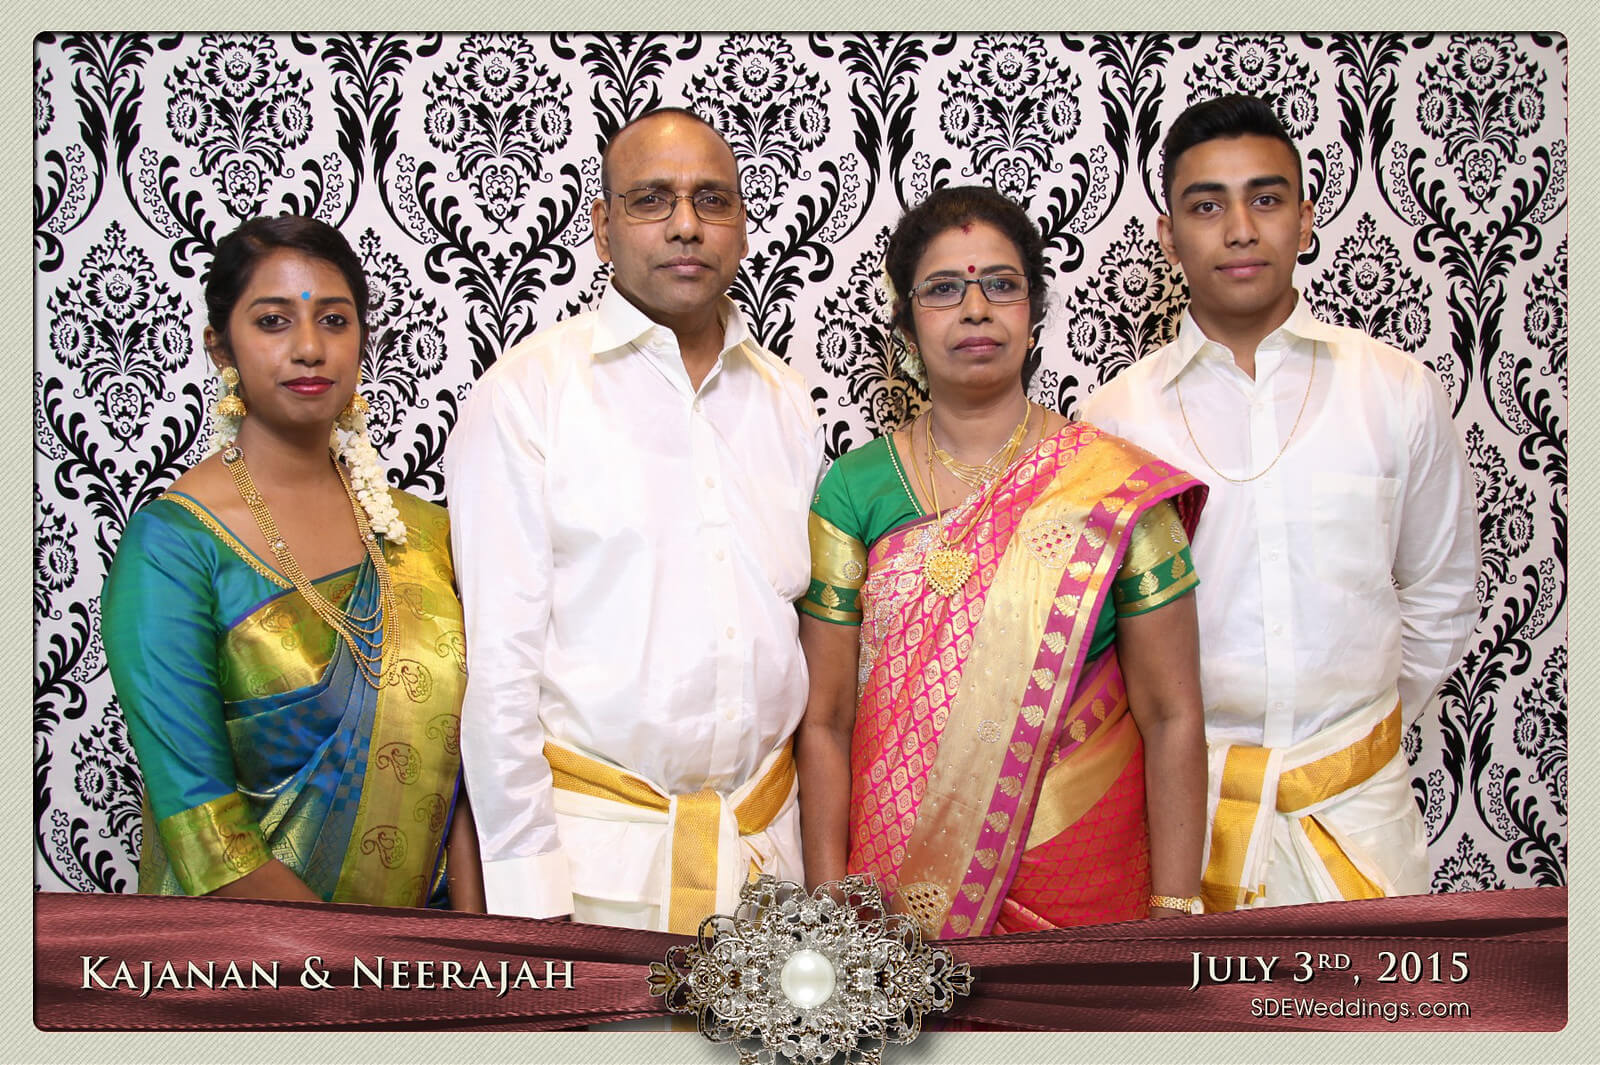 Toronto Scarborough Convention Centre Hindu Wedding Photo Booth Rental 2